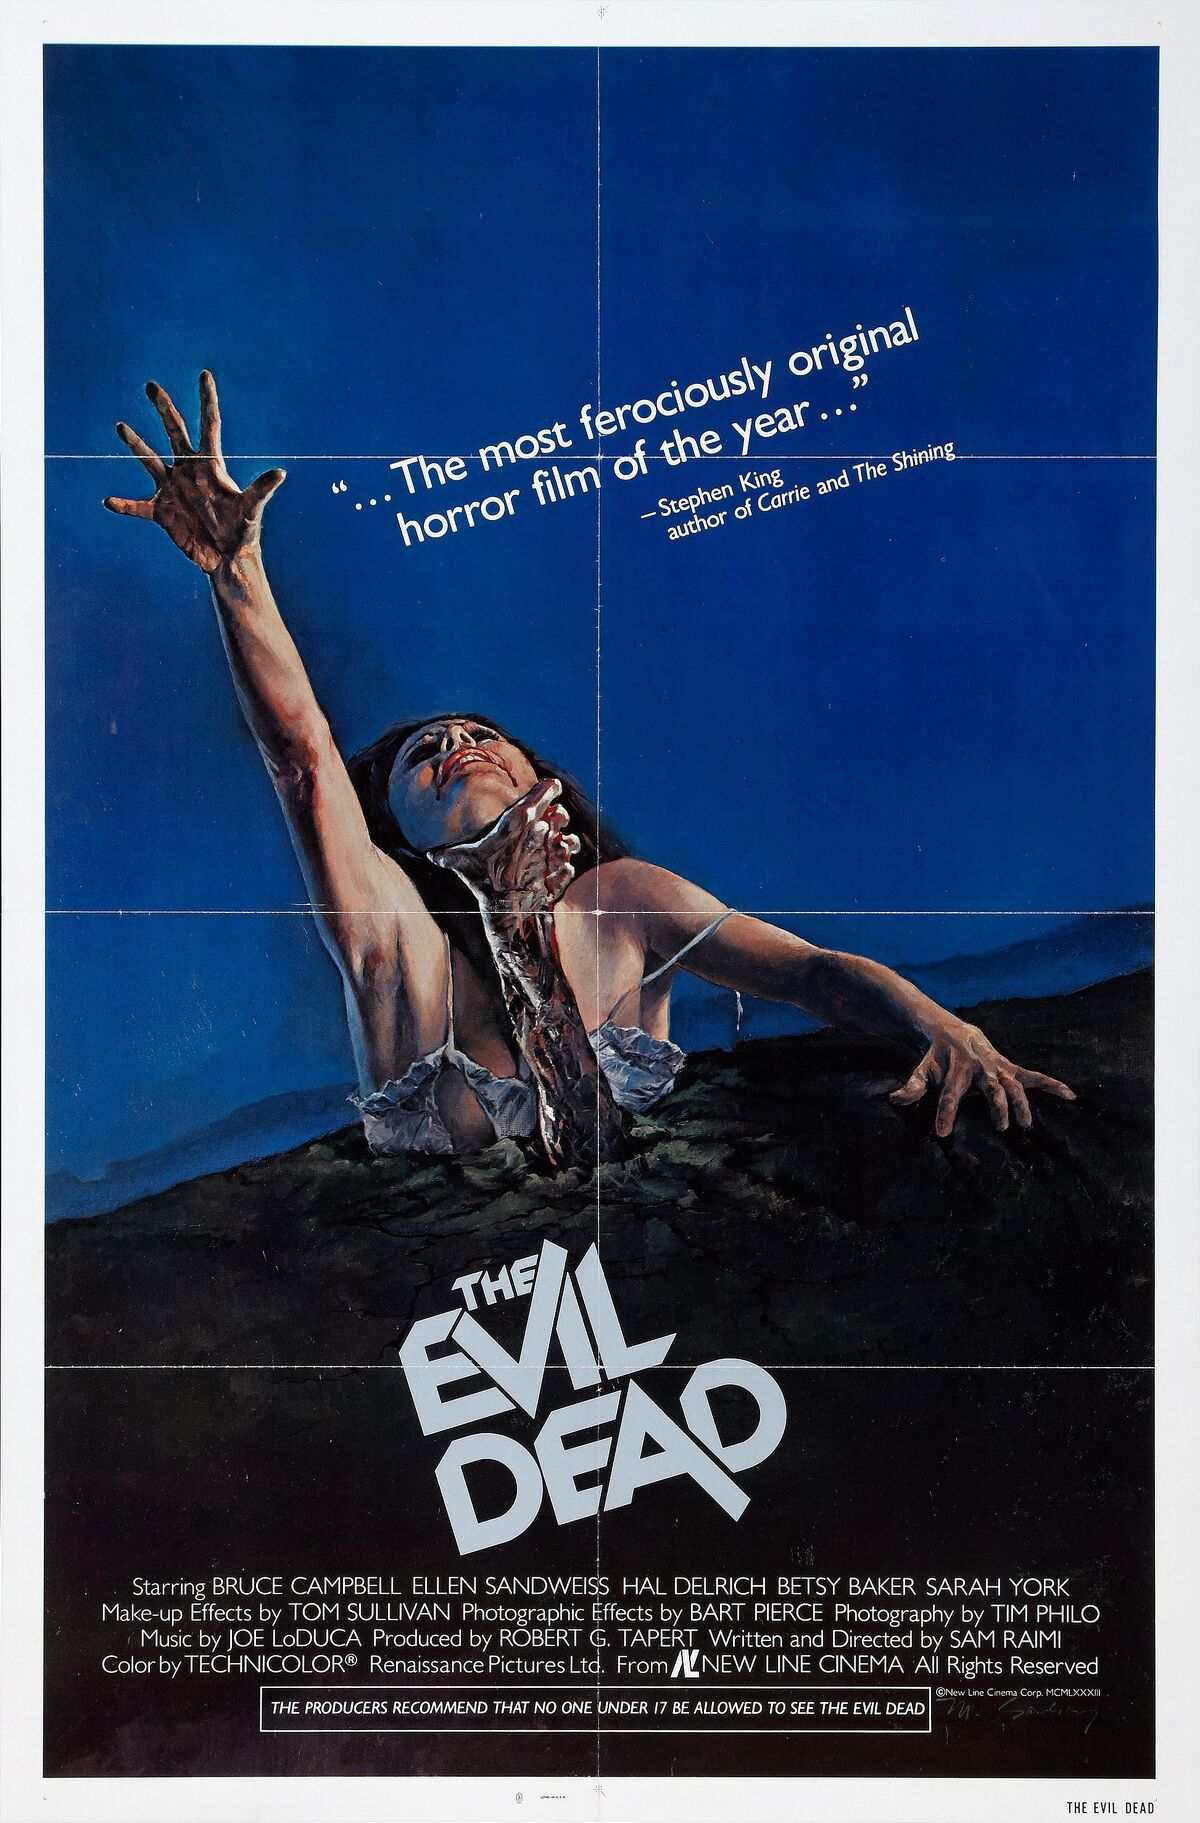 Evil Dead Rise - Box Office Mojo